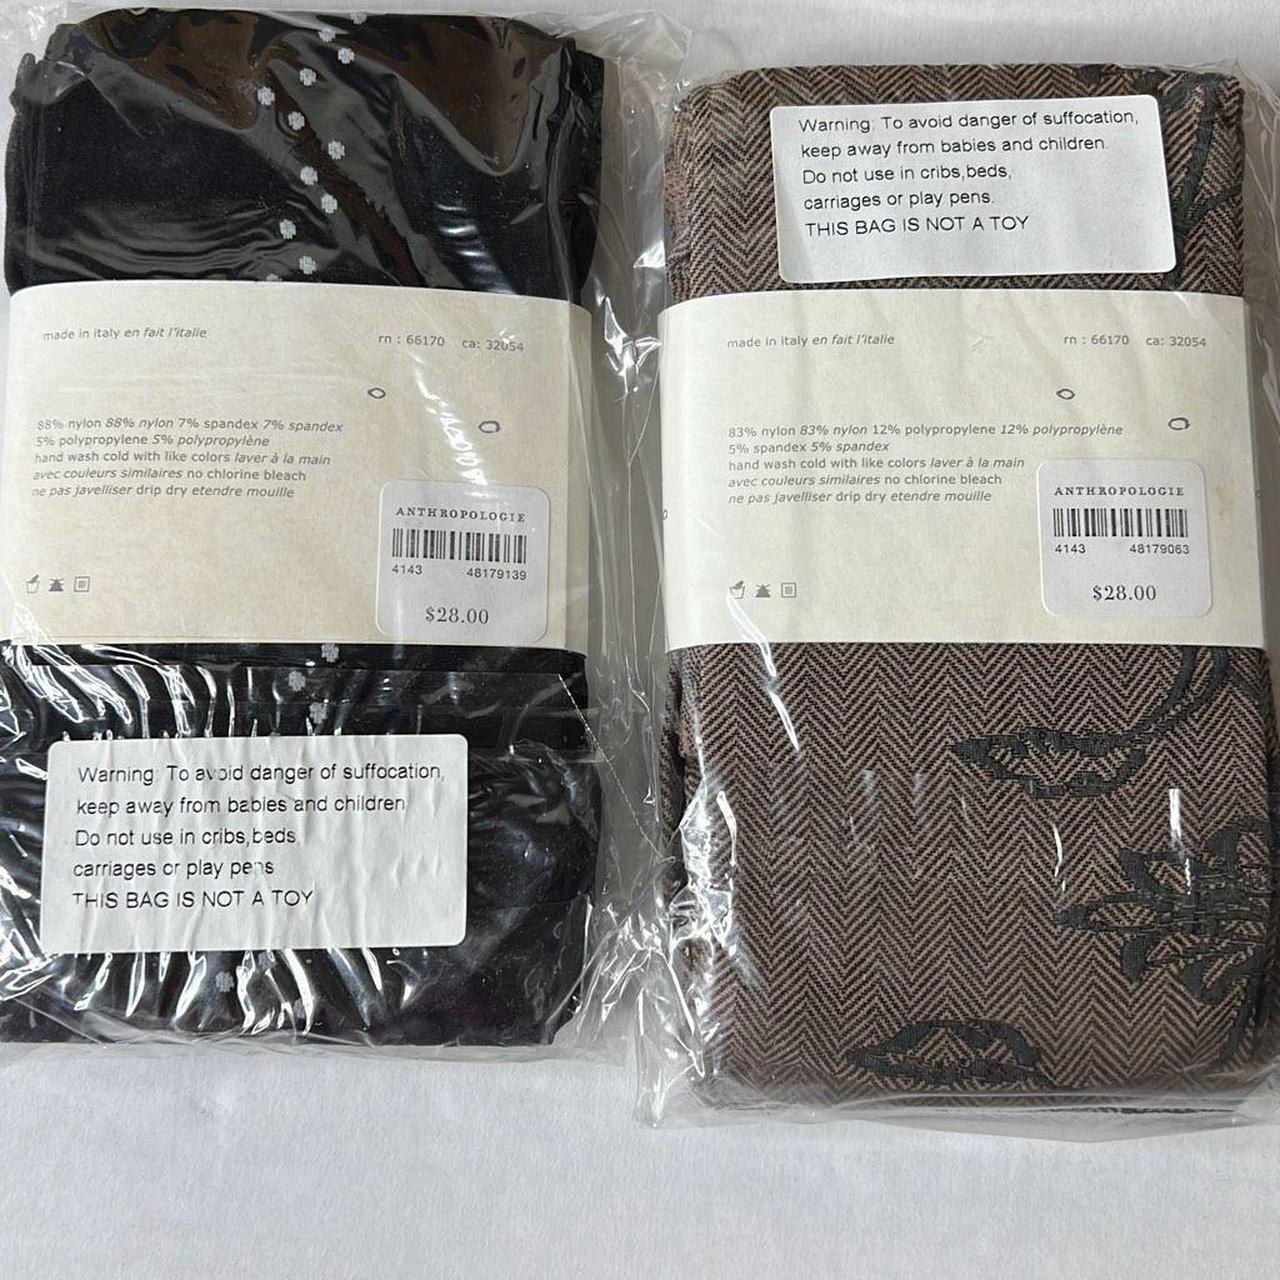 Tintoretta Marled Knit Tights, $39, Anthropologie